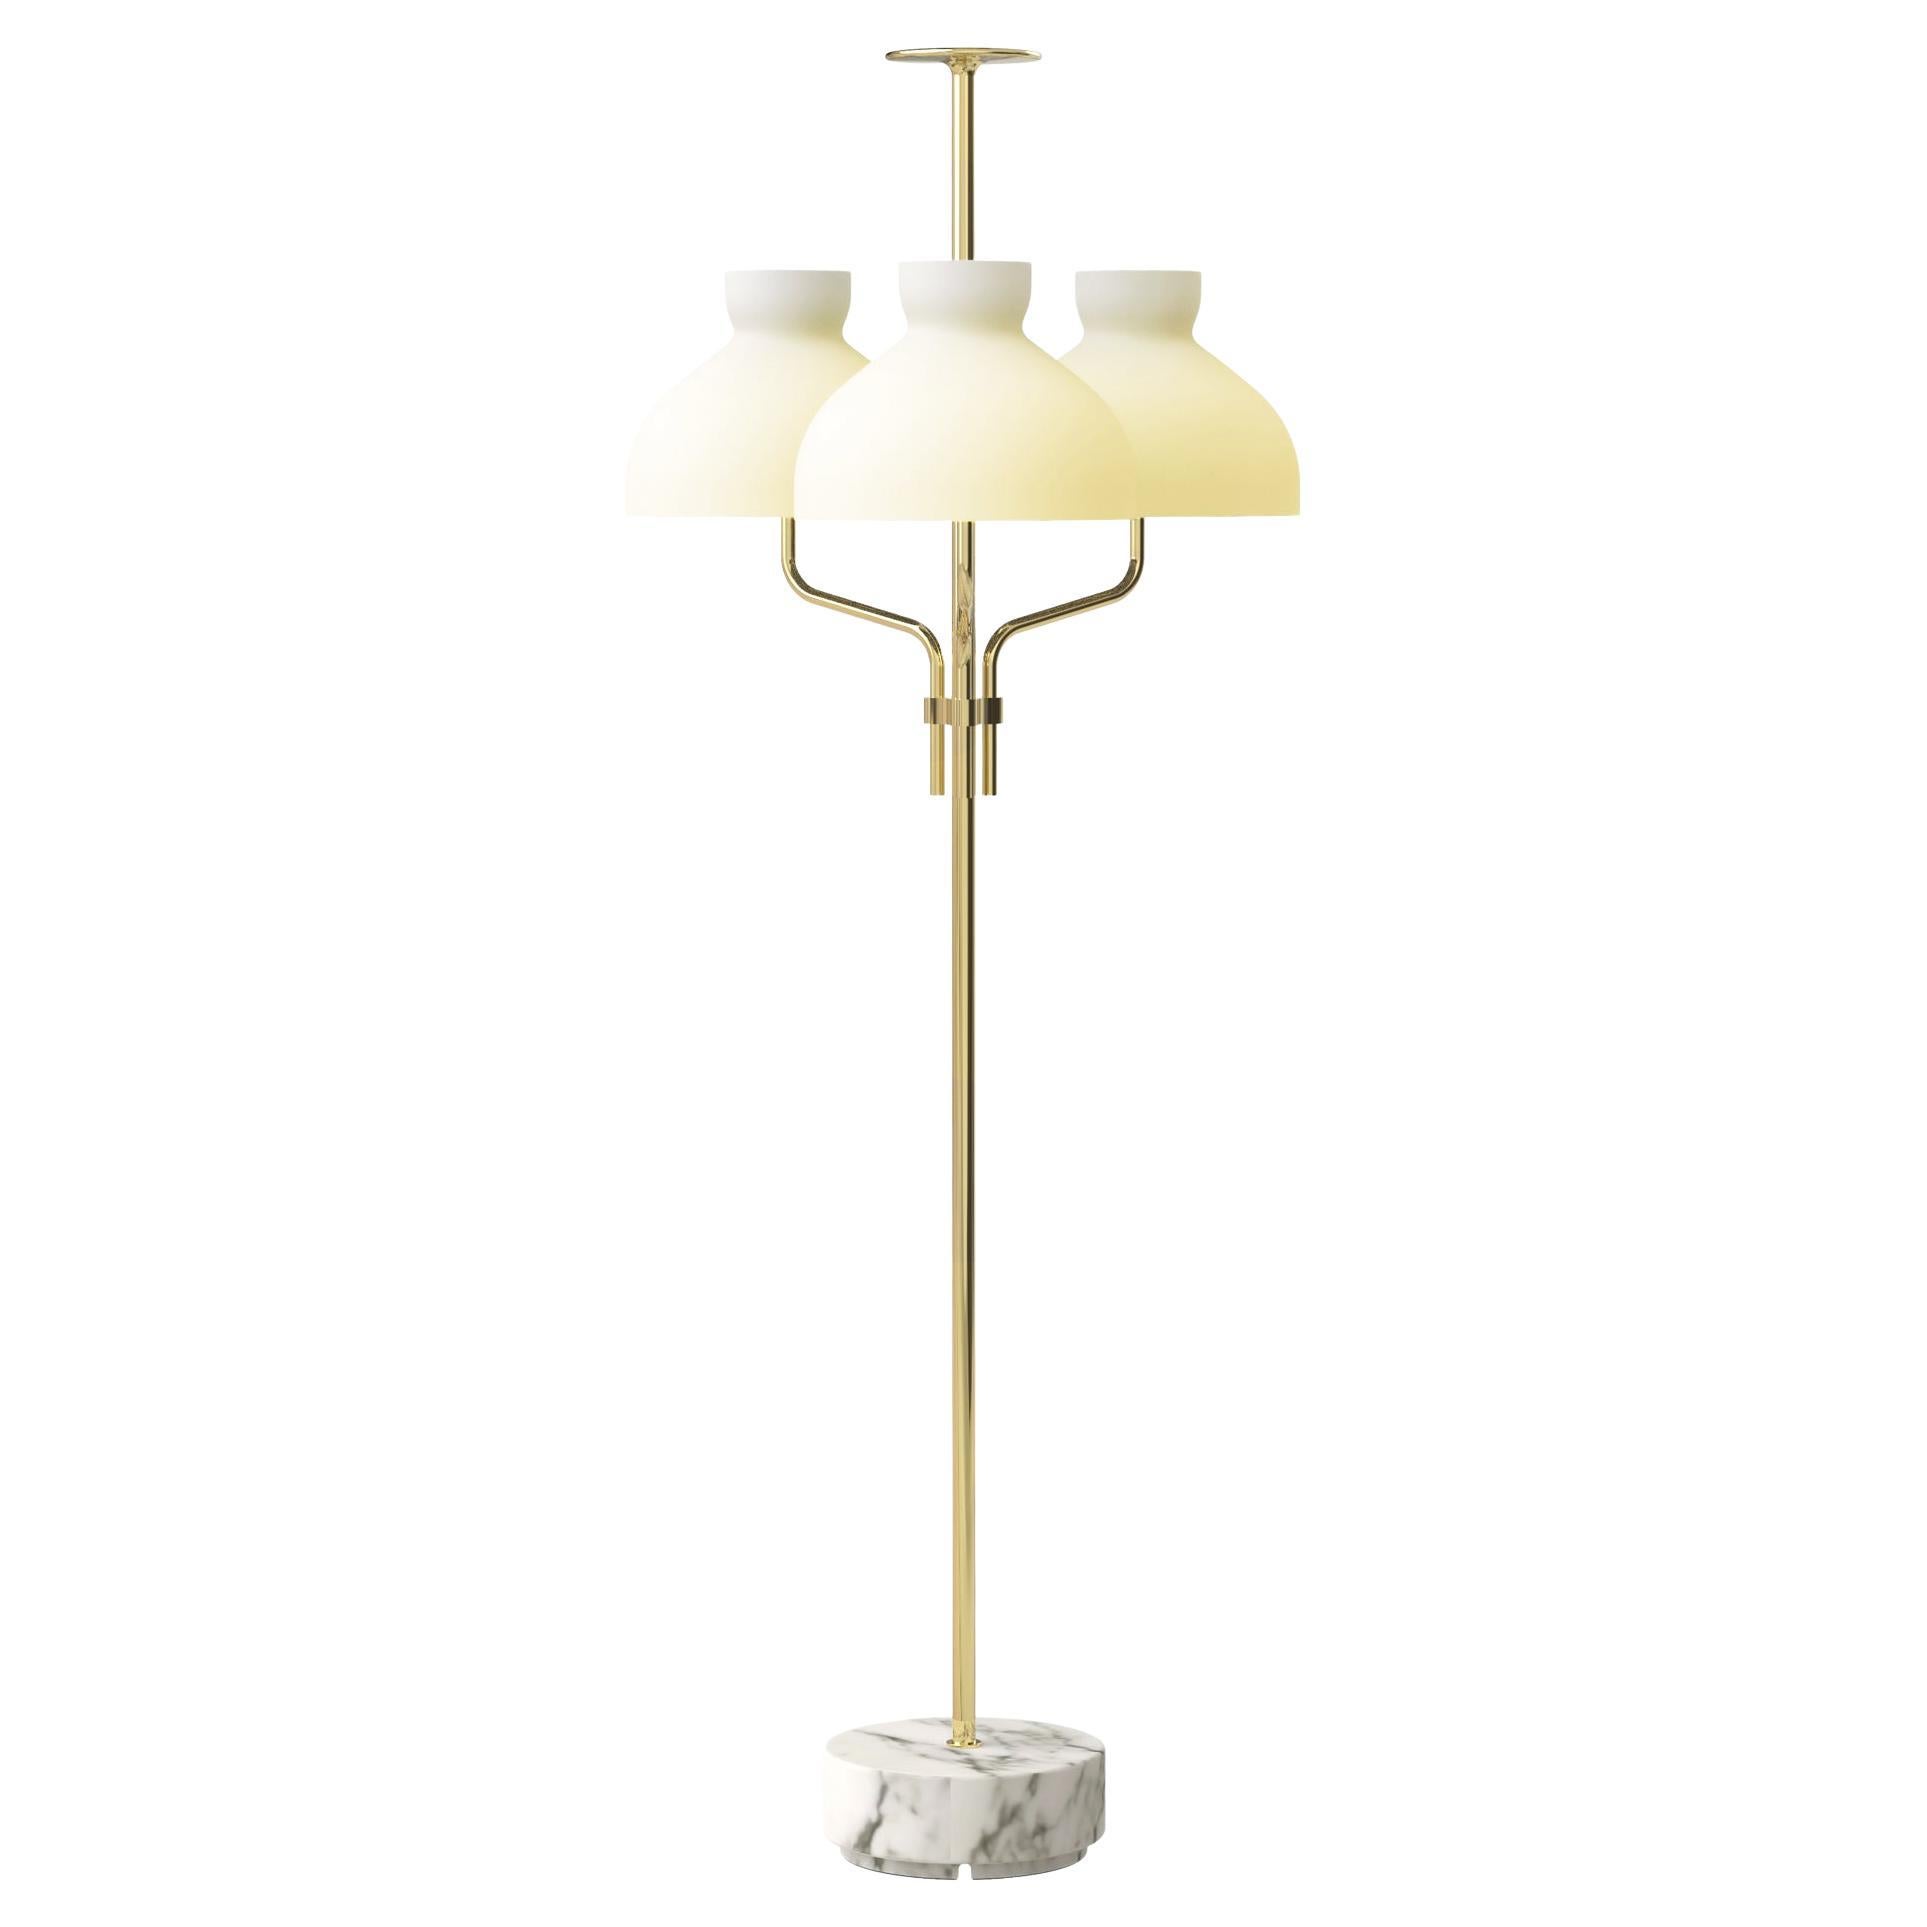 Ignazio Gardella 'Arenzano Tre Fiamme' Floor Lamp in White Marble and Brass